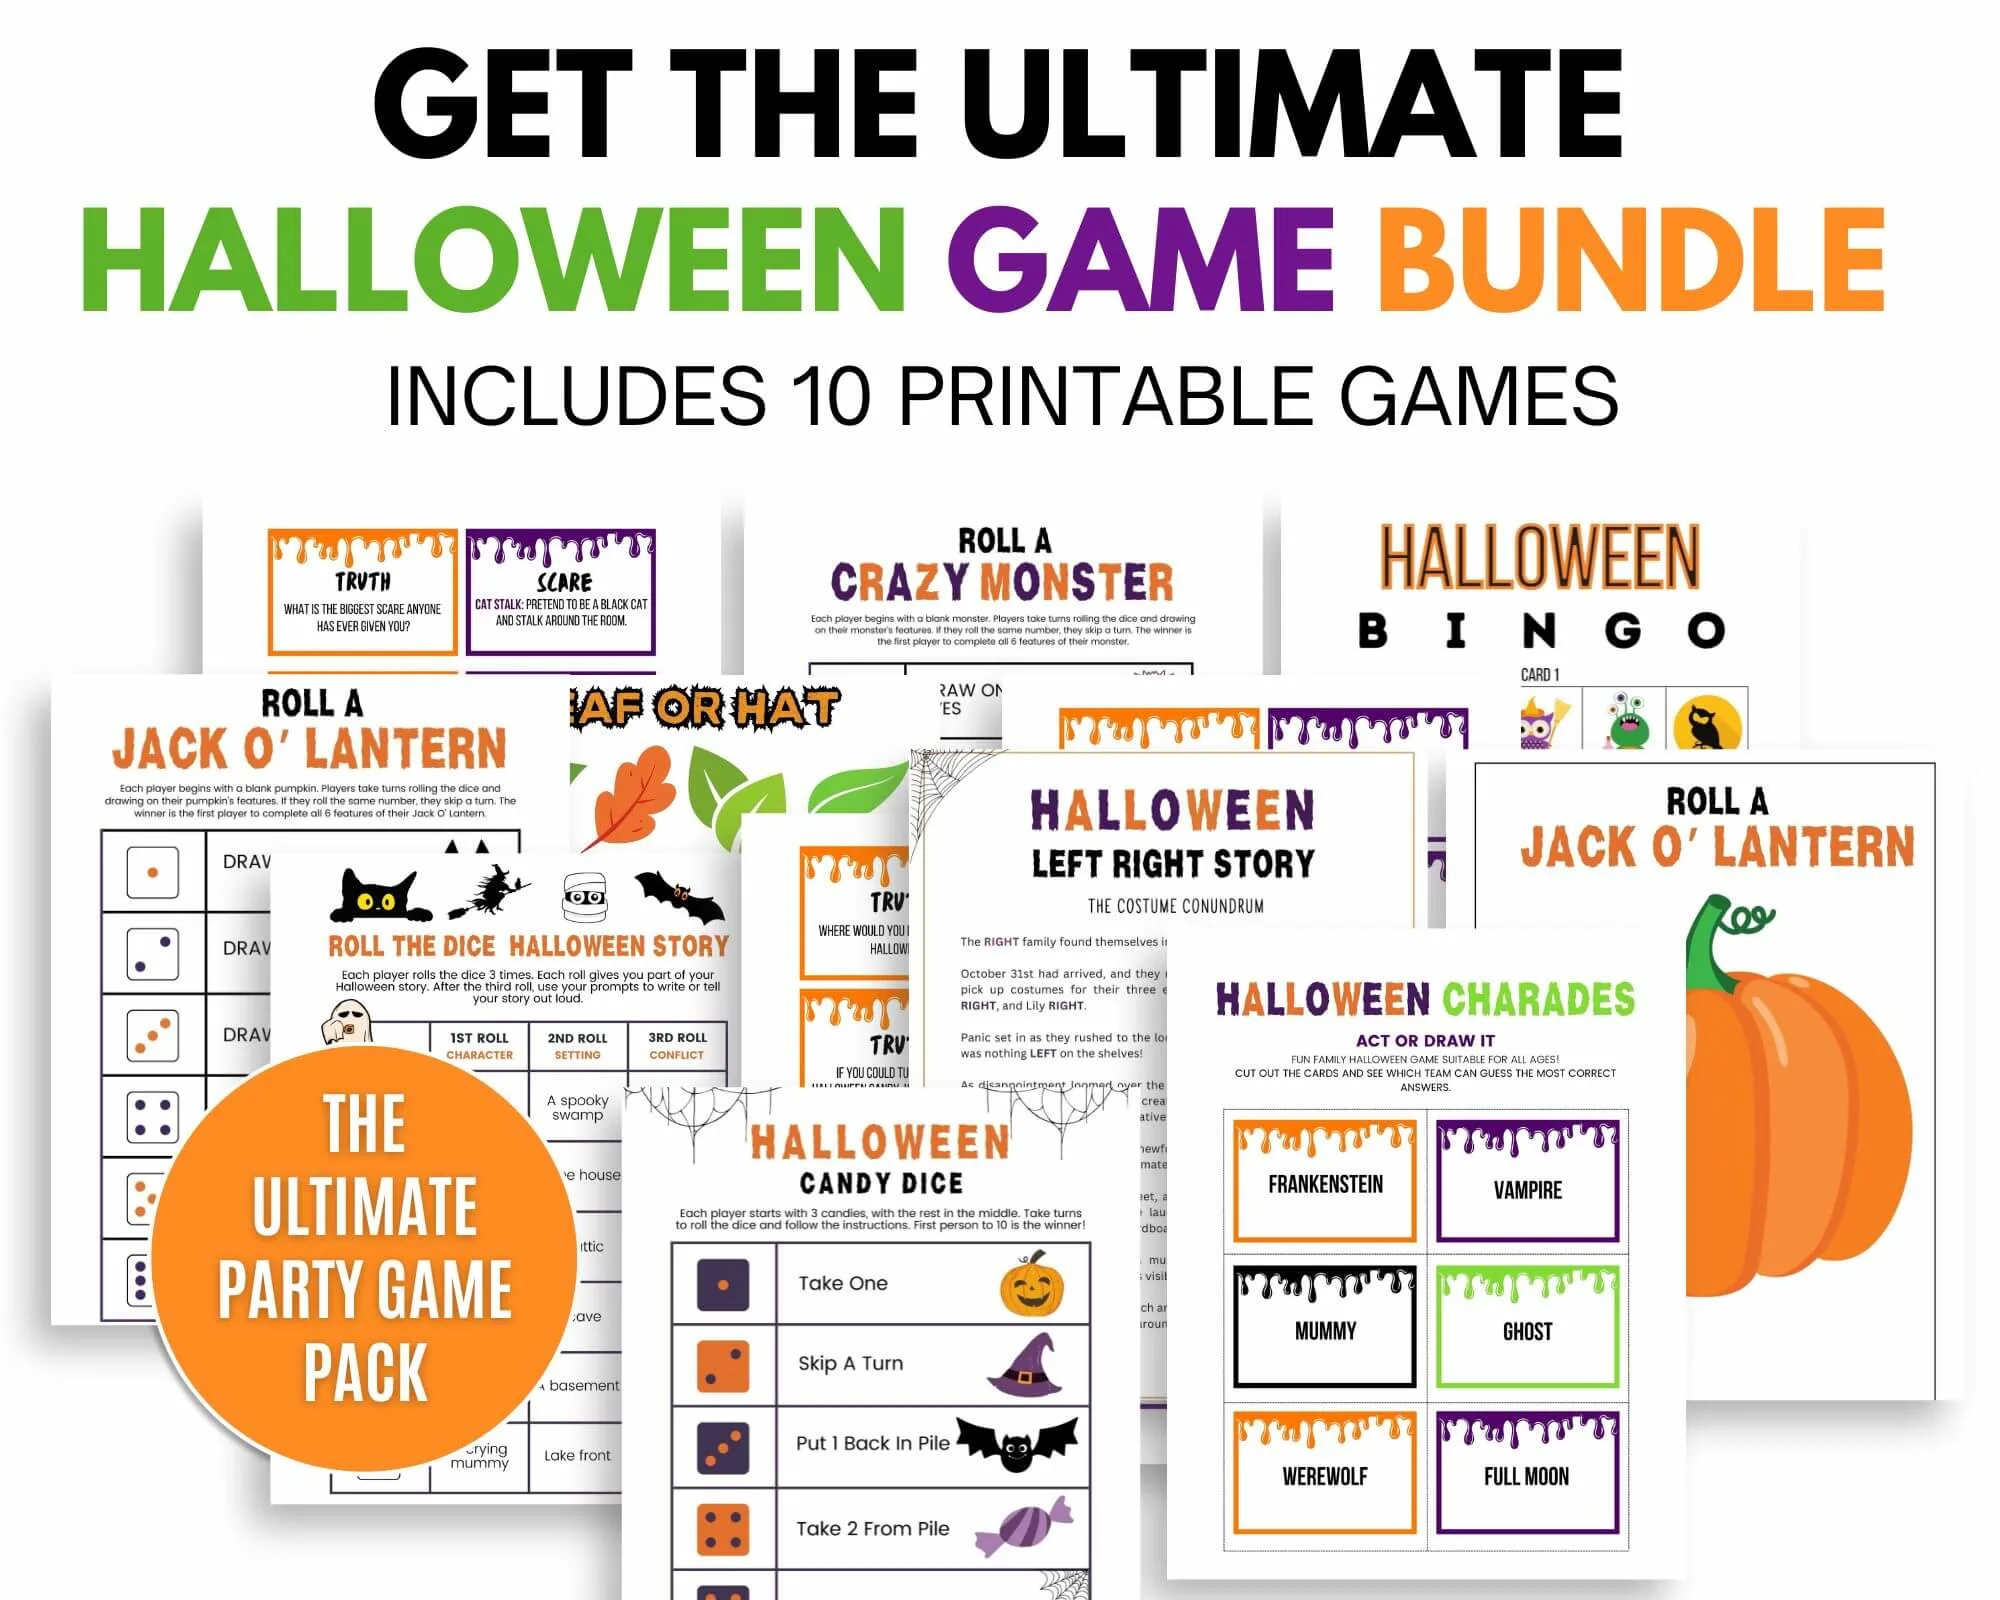 Halloween game bundle sales image